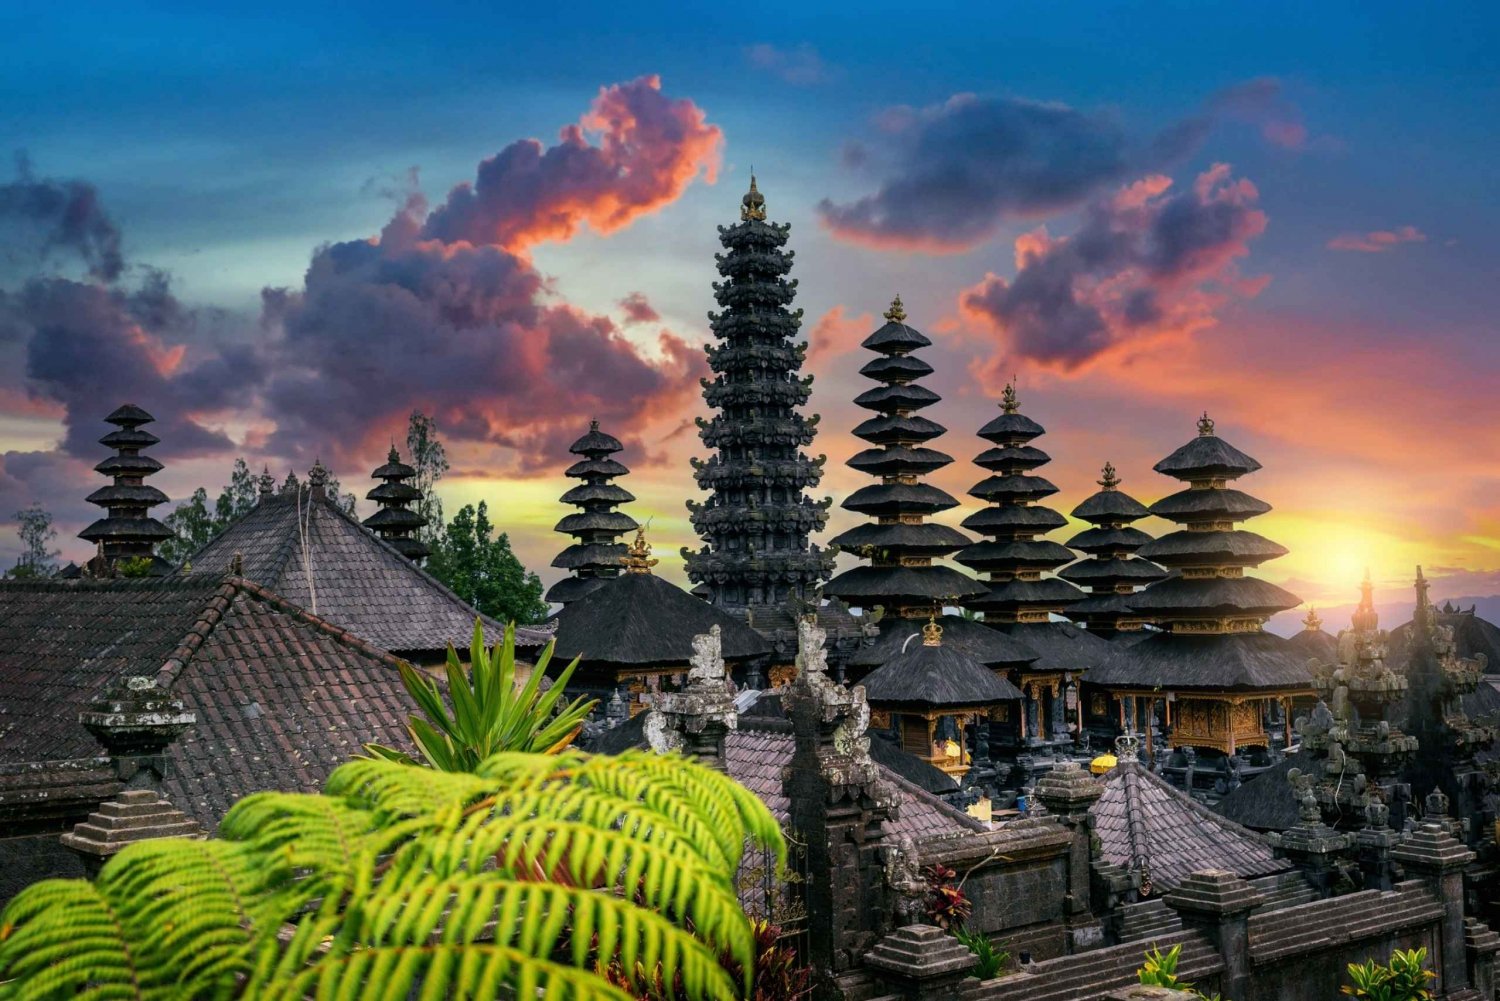 Bali: Besakih Temple & Lempuyang Temple Gates of Heaven Tour